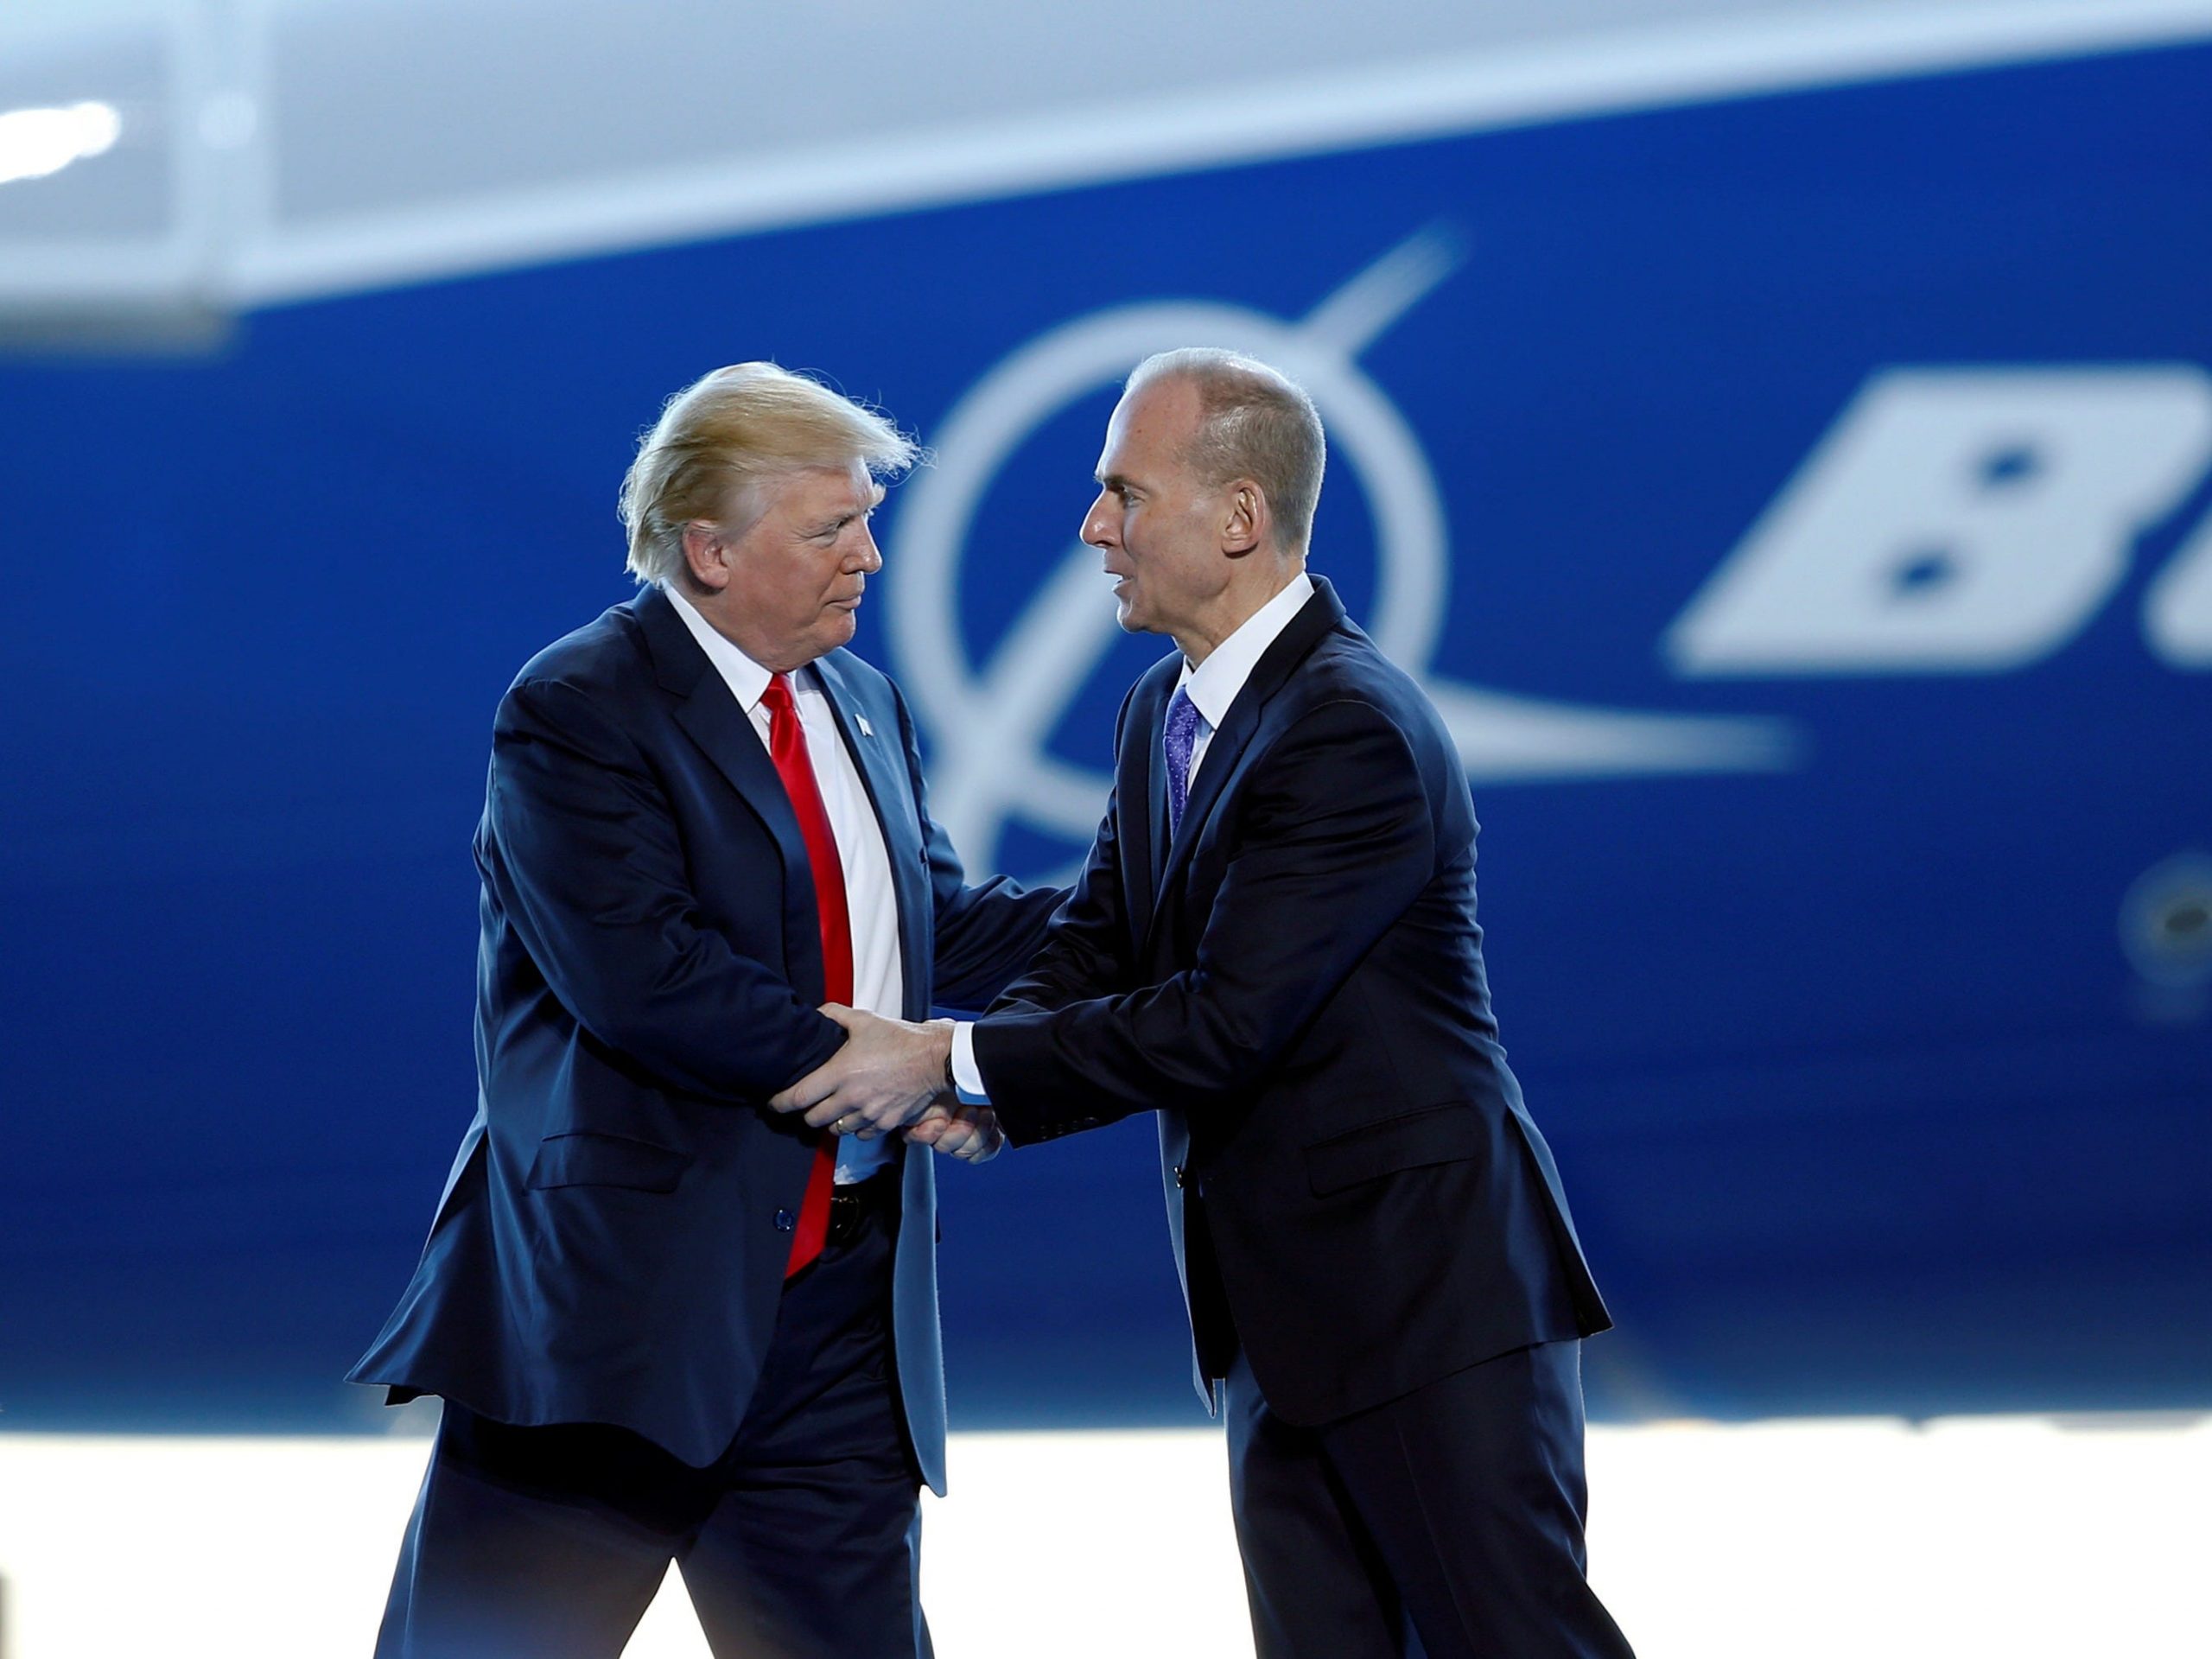 FILE PHOTO: U.S. President Donald Trump greets Boeing Chairman, President and CEO Dennis Muilenburg in North Charleston, South Carolina, U.S. February 17, 2017.  REUTERS/Randall Hill/File Photo